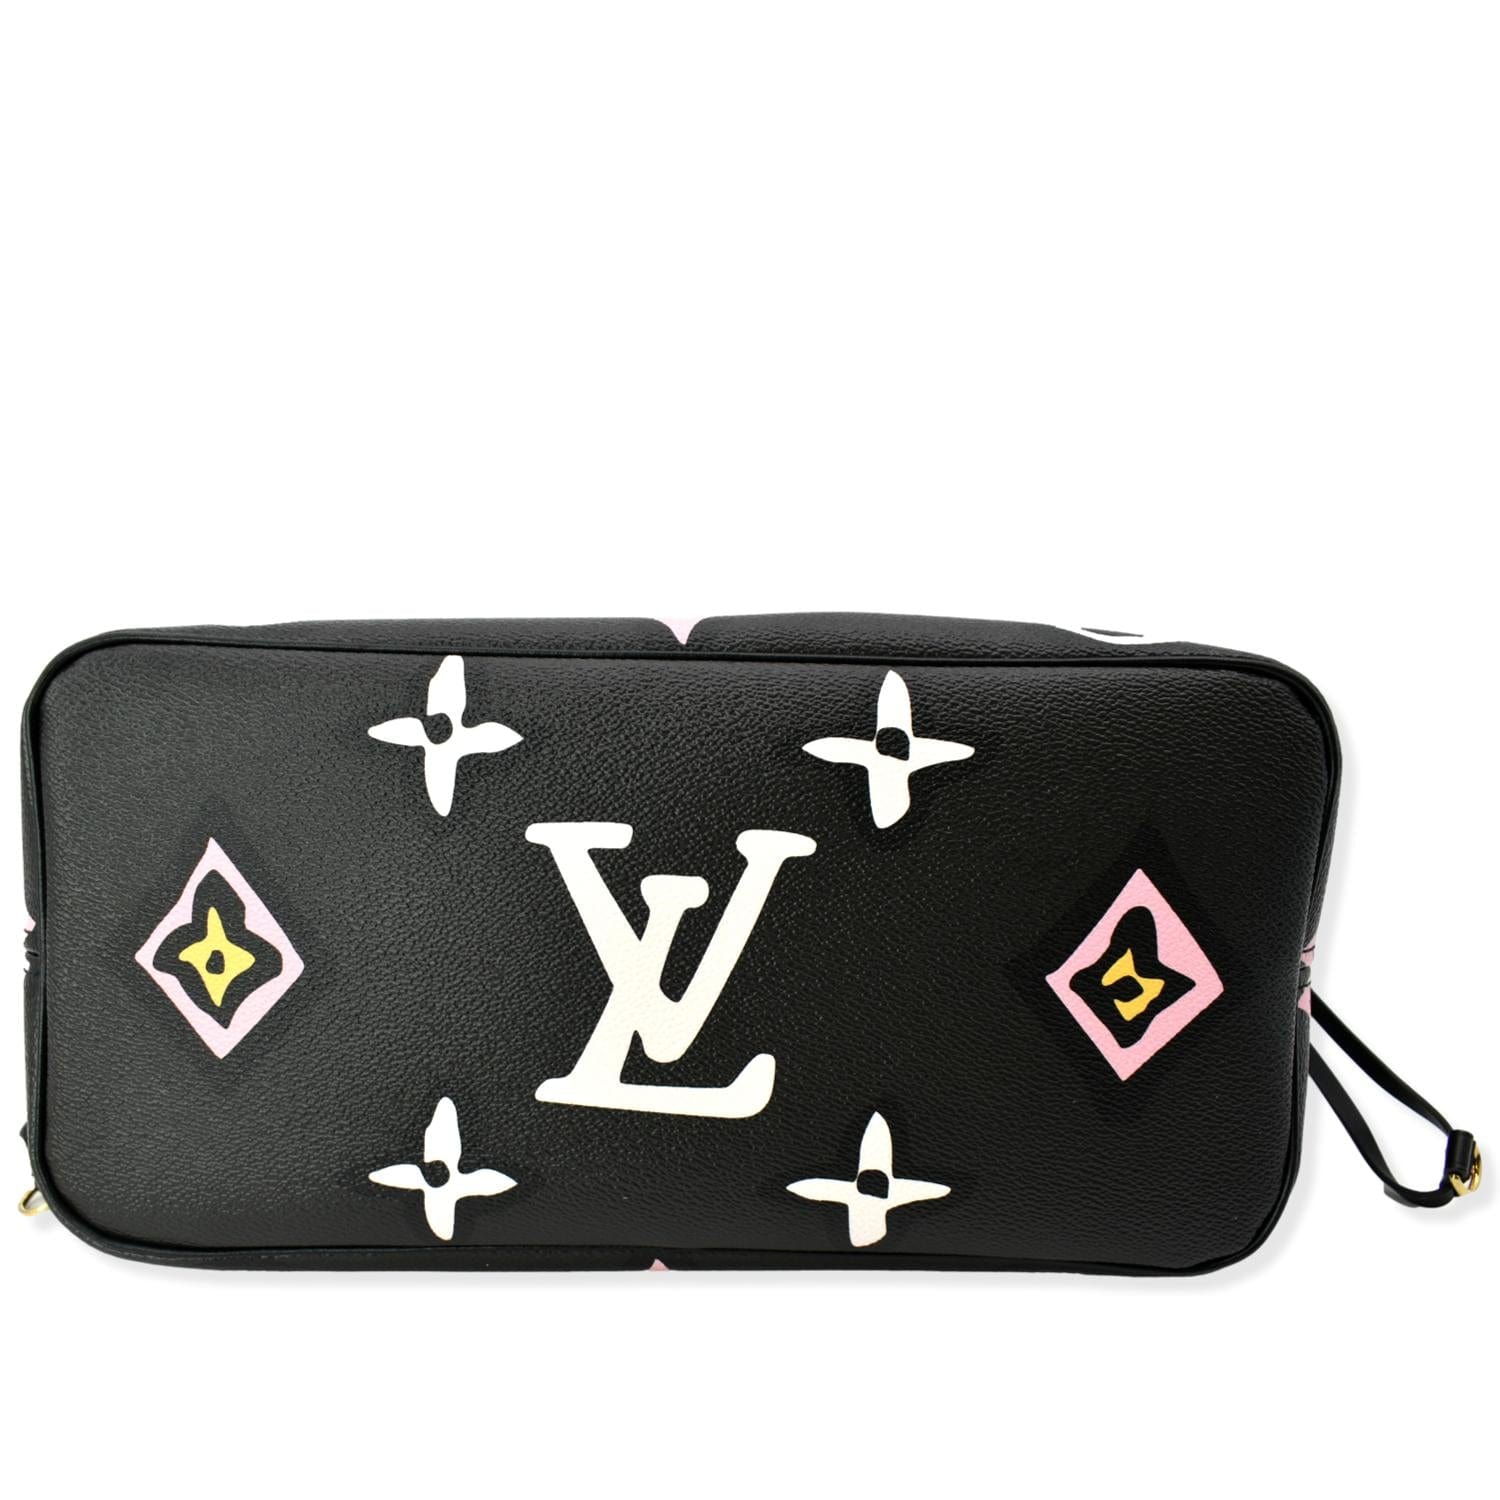 Louis Vuitton Neverfull MM Wild At Heart Monogram Giant Tote Bag Black